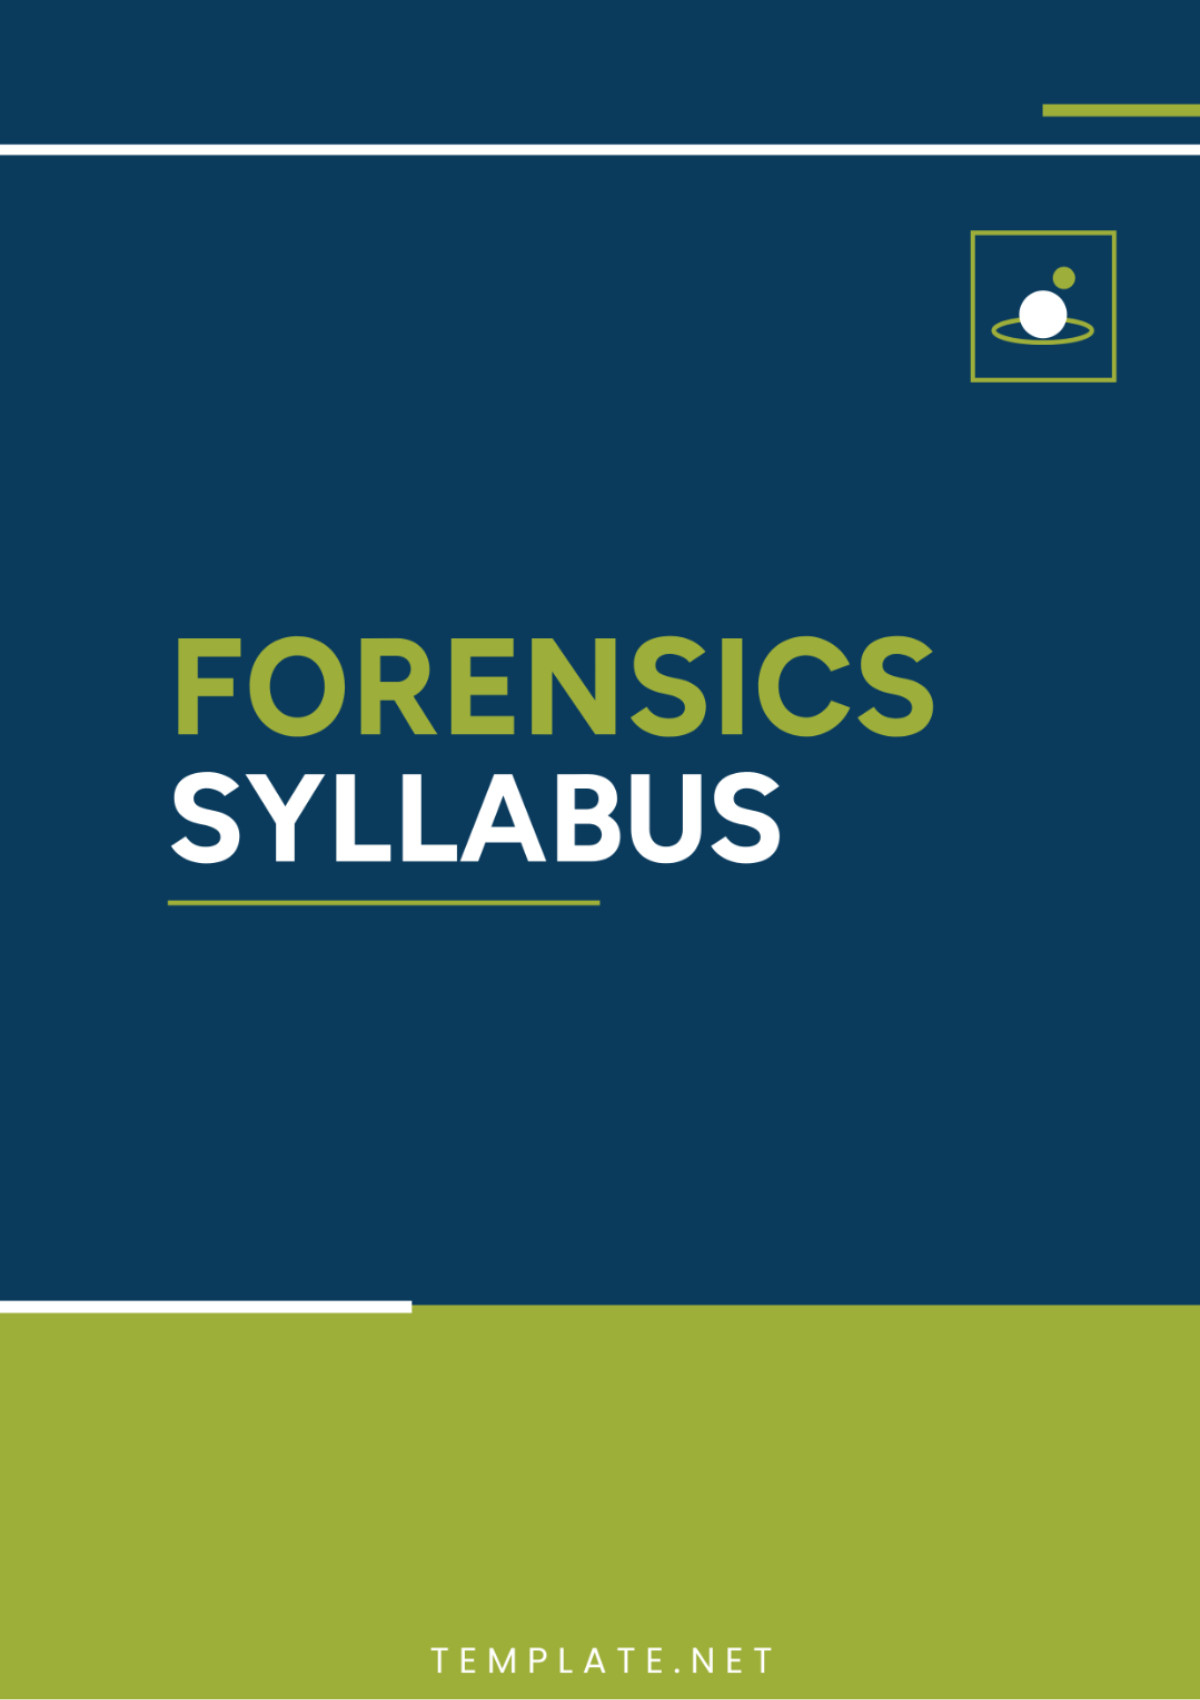 Forensics Syllabus Template